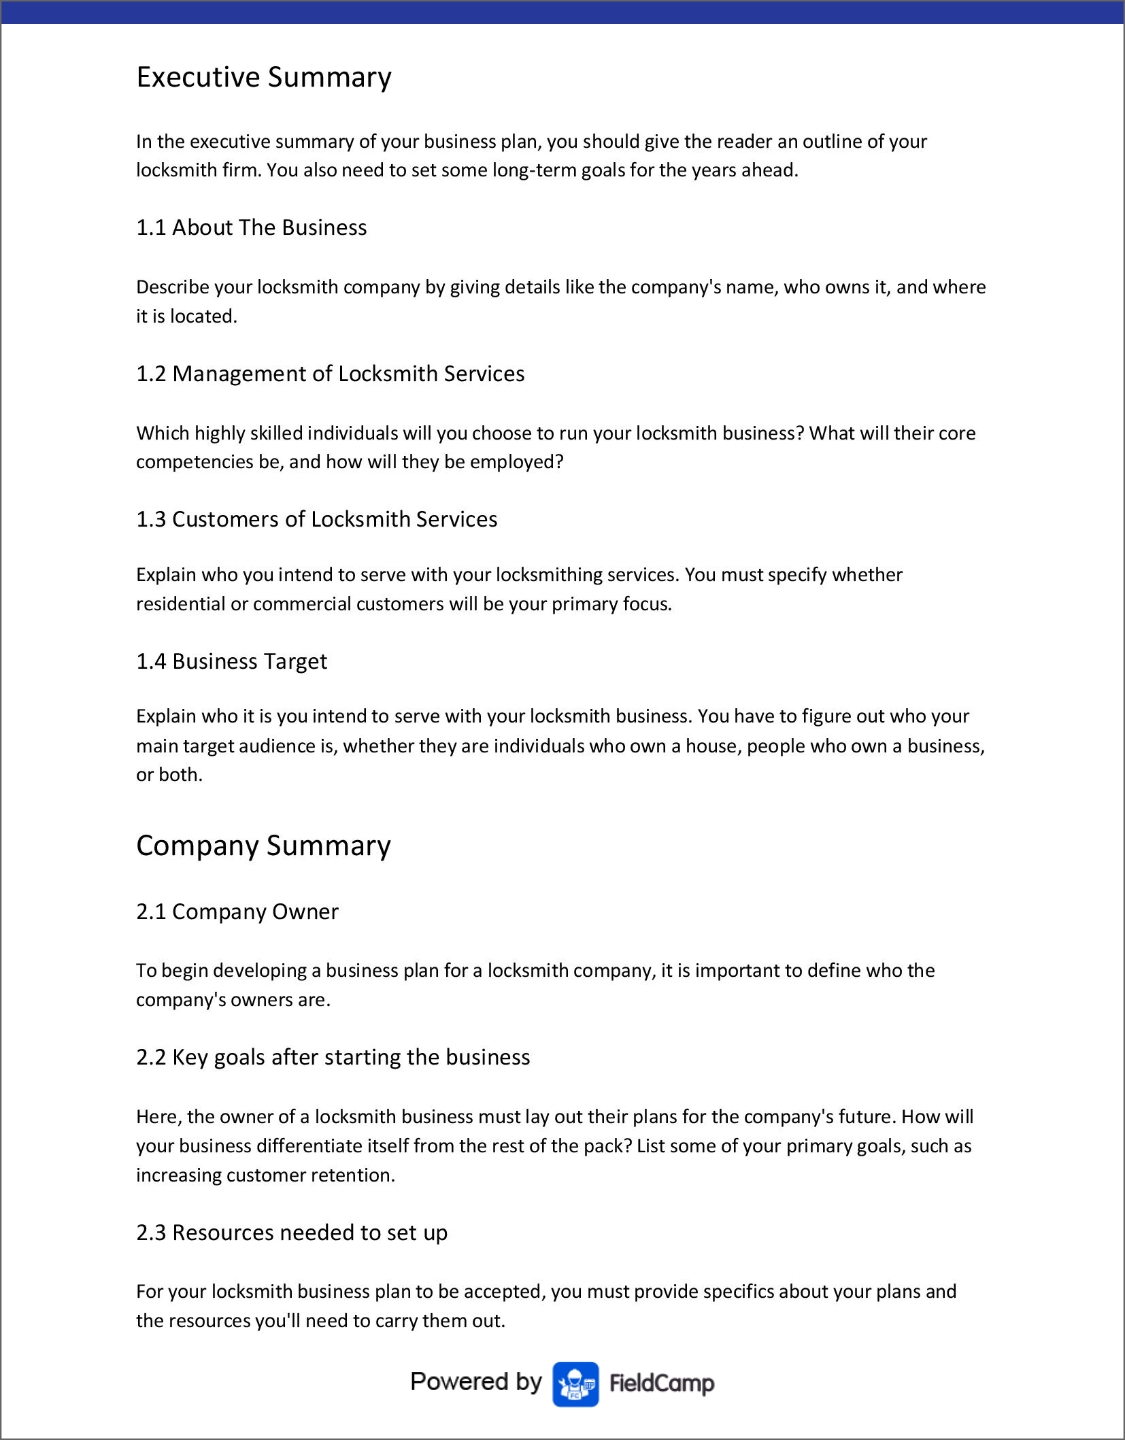 Locksmith business plan template